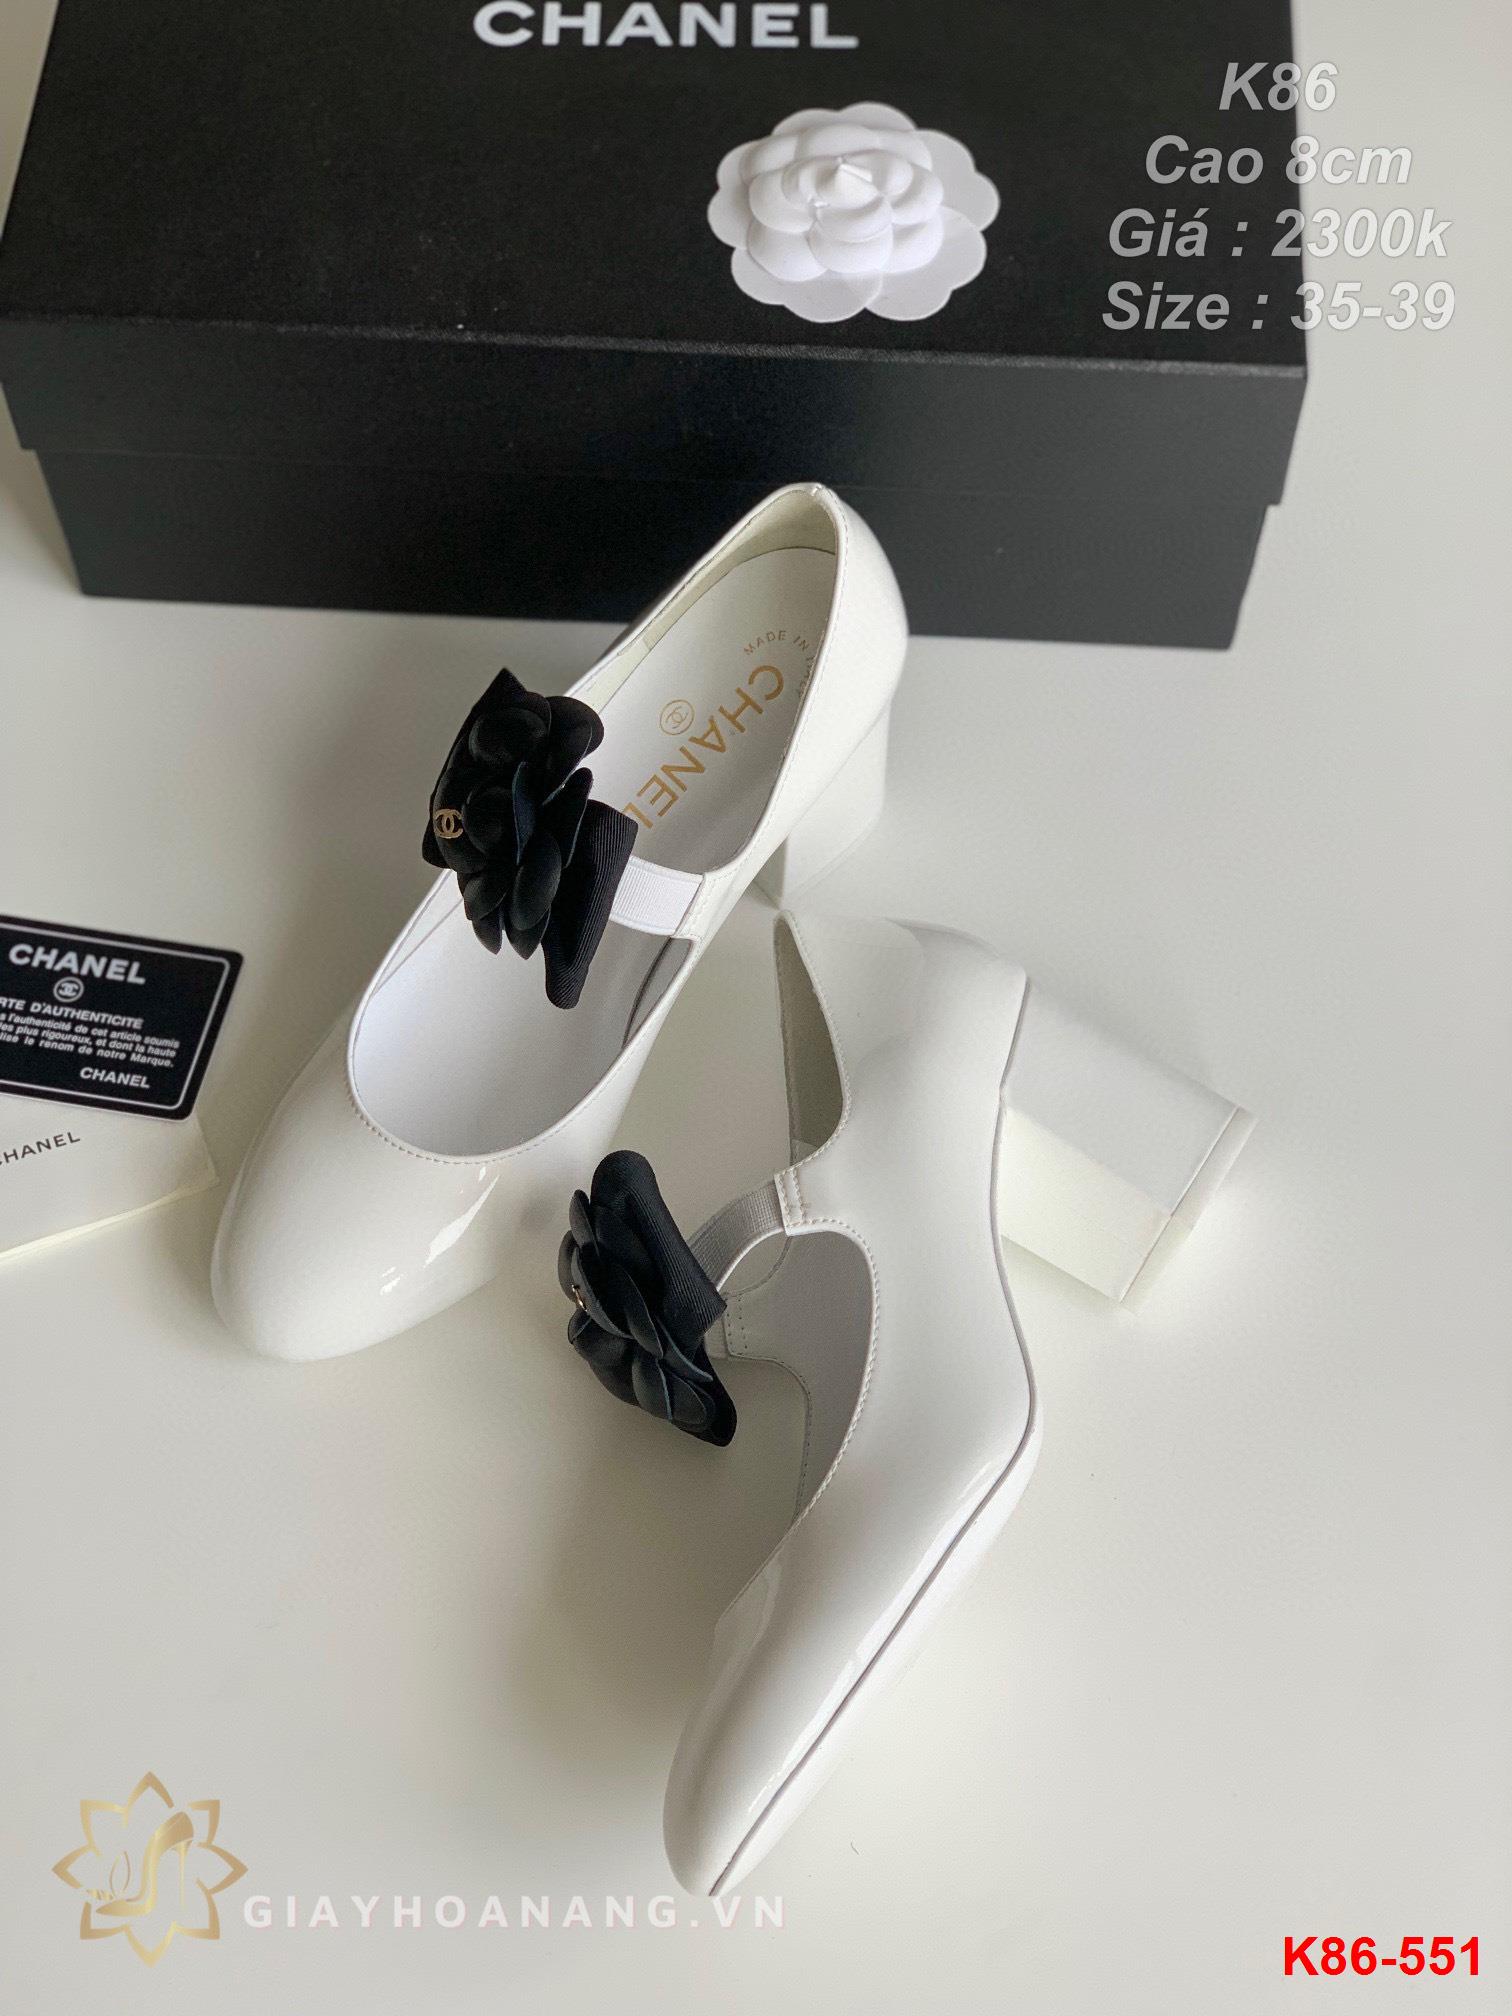 K86-551 Chanel giày cao 8cm siêu cấp